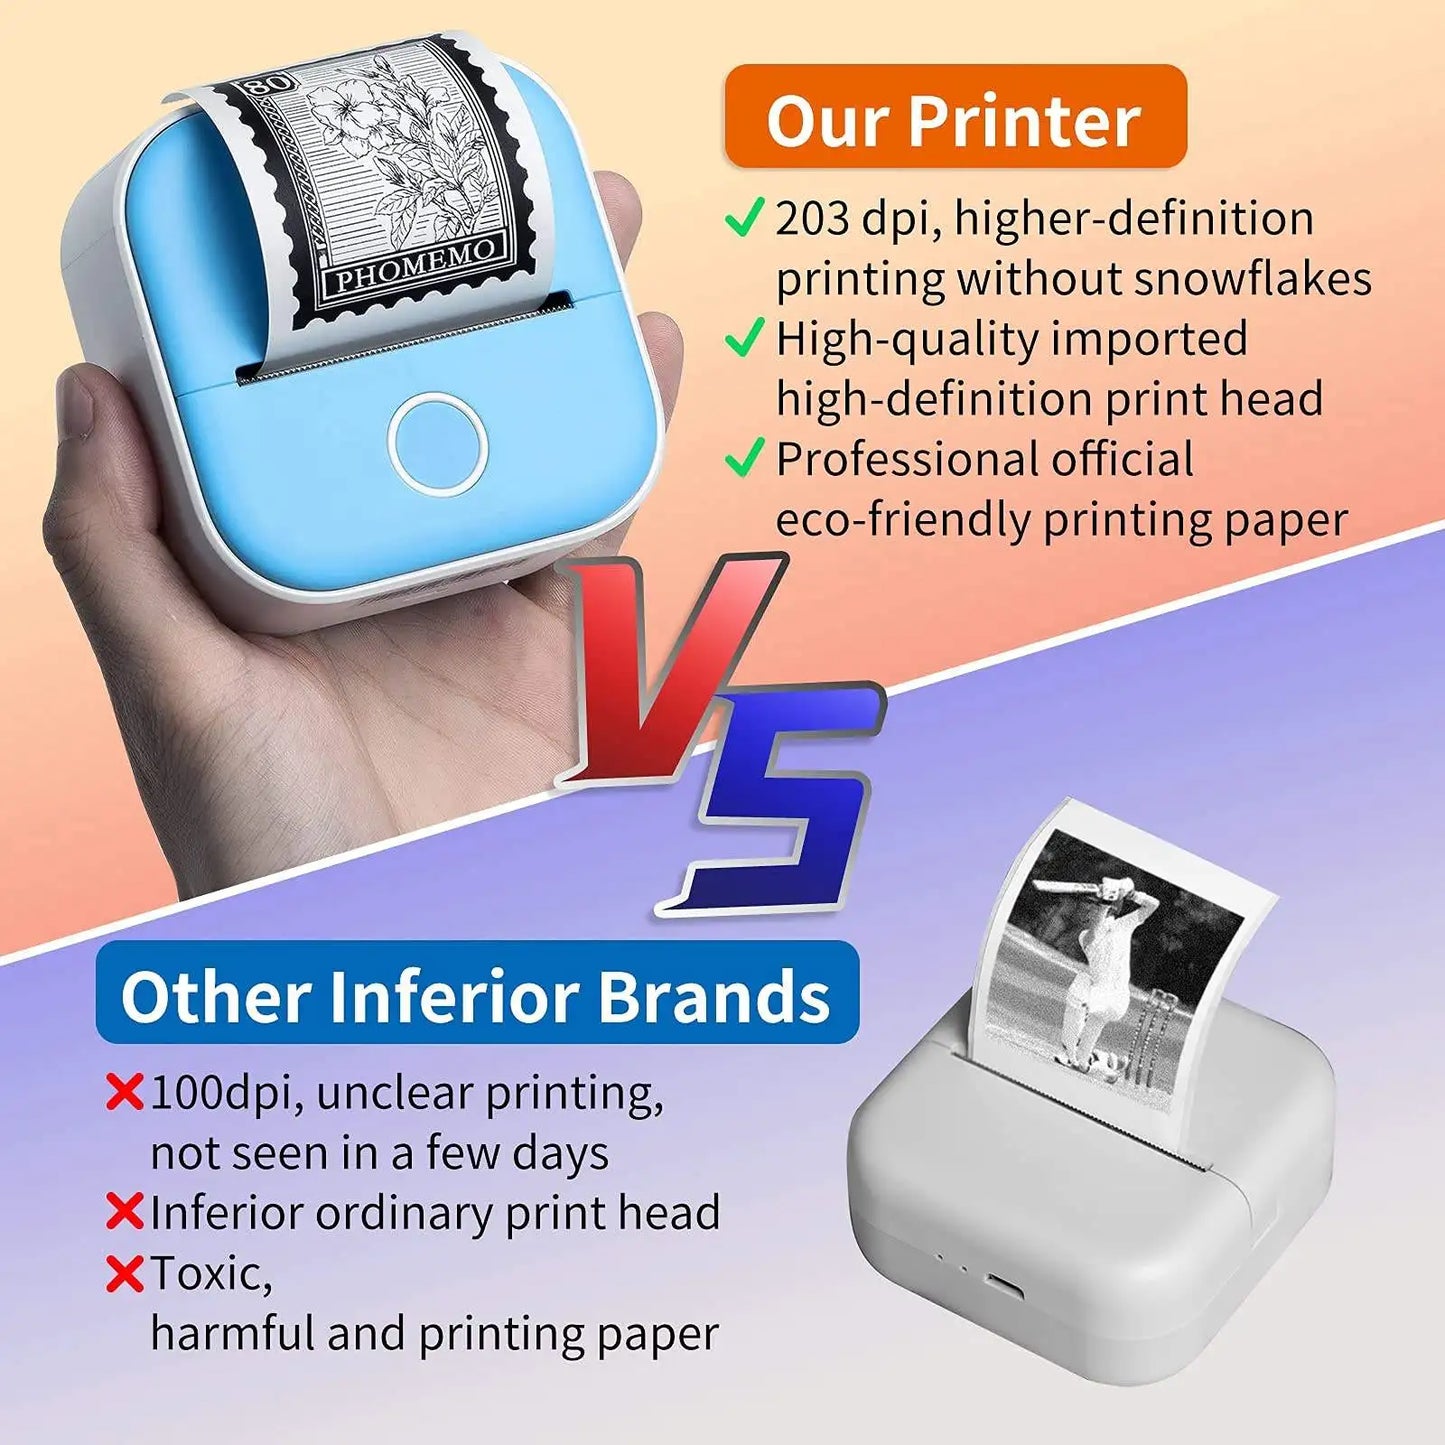 Portable Mini Thermal Printer